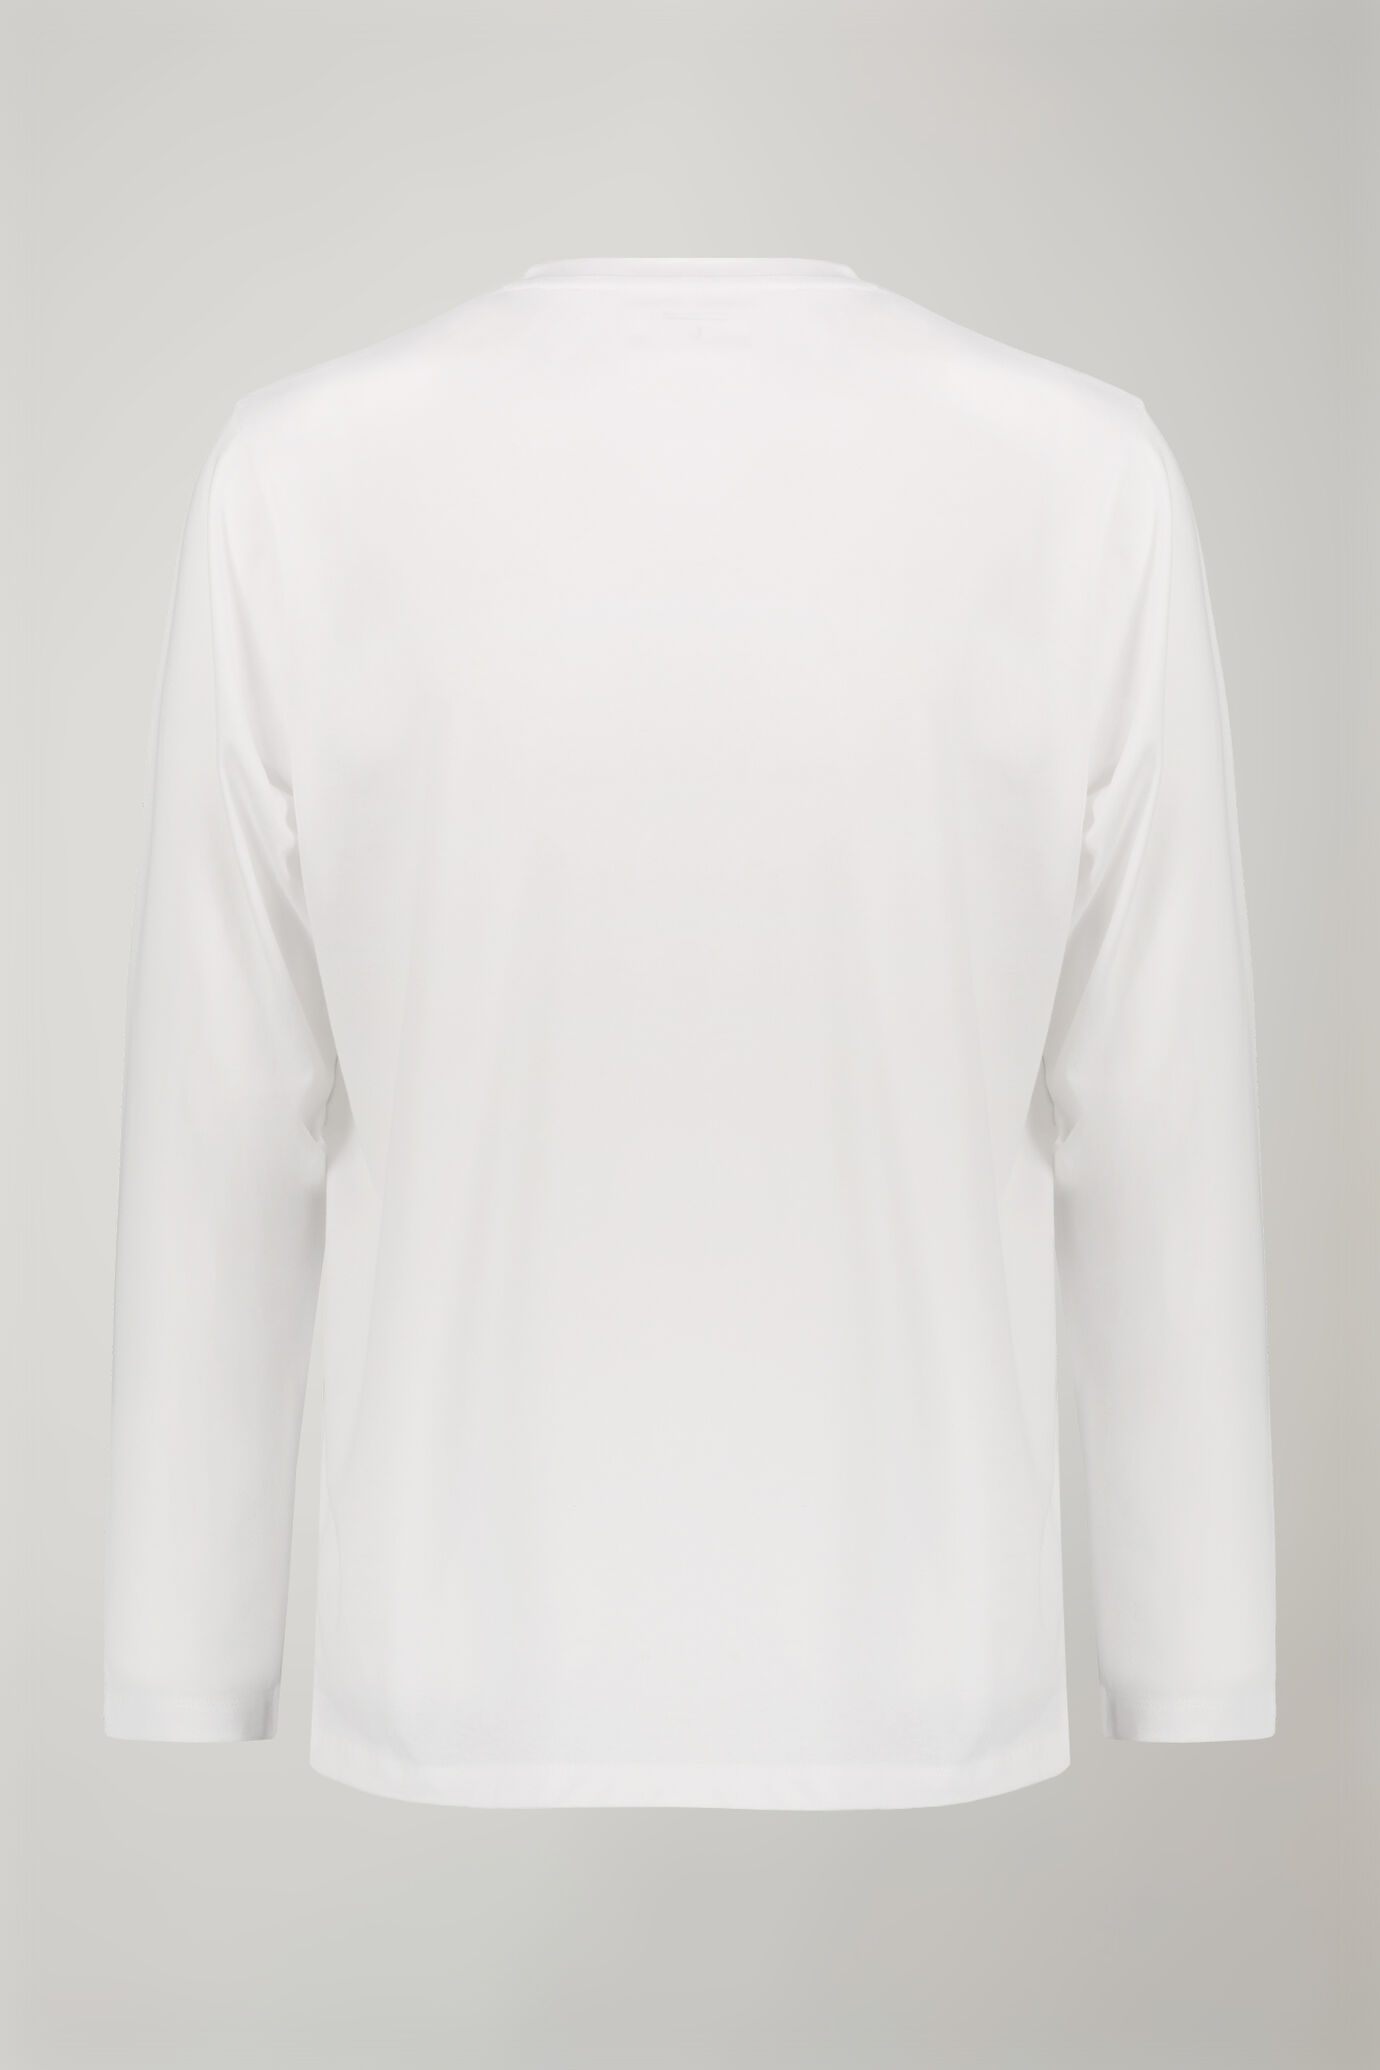 T-shirt uomo girocollo con manica lunga 100% cotone regular fit image number 5